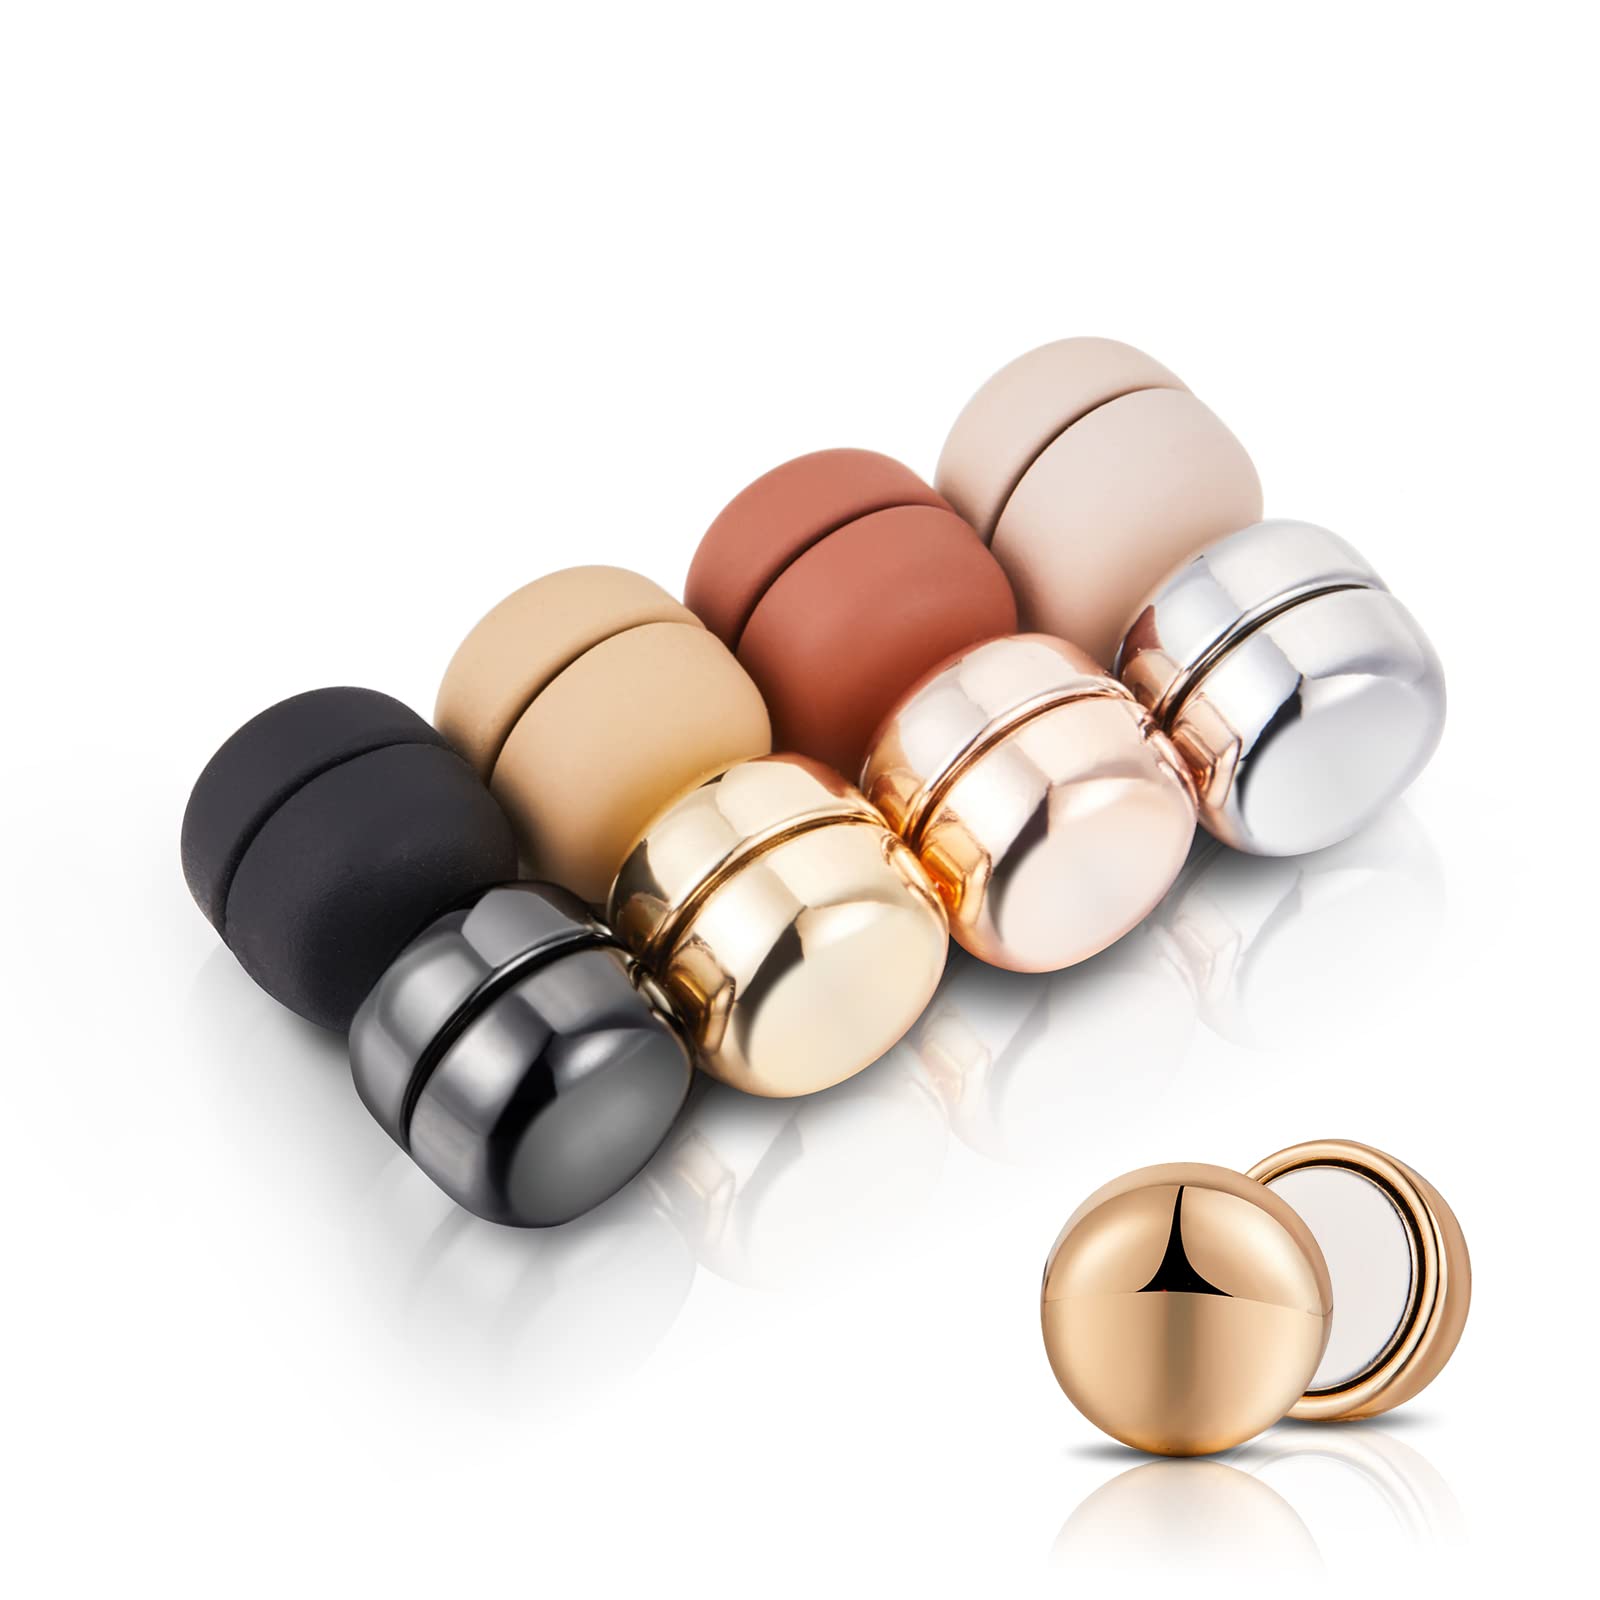 5 Pieces Metal Hijab Pin for Women - Golden